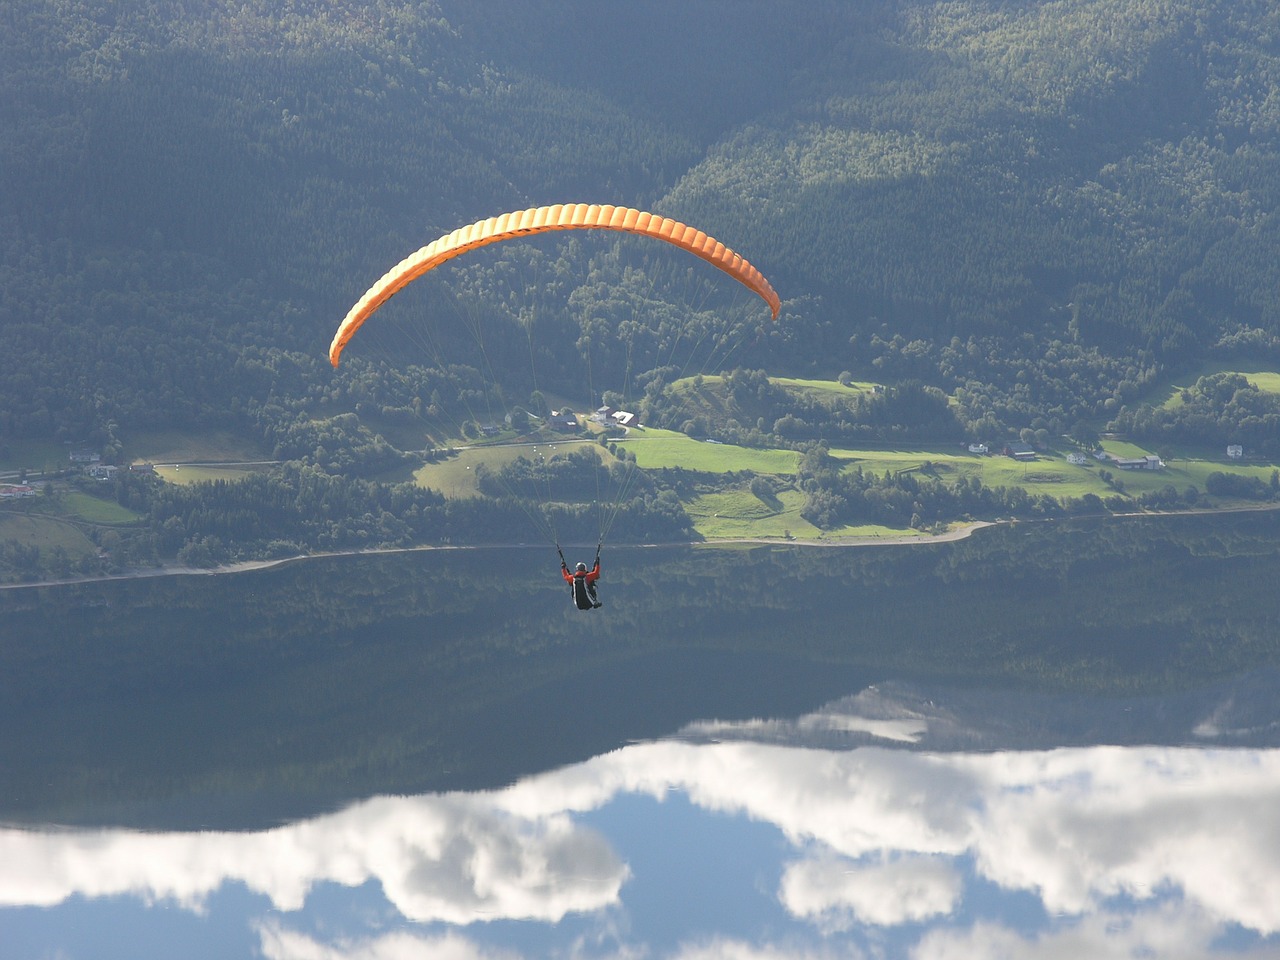 voss hang gliding sport free photo